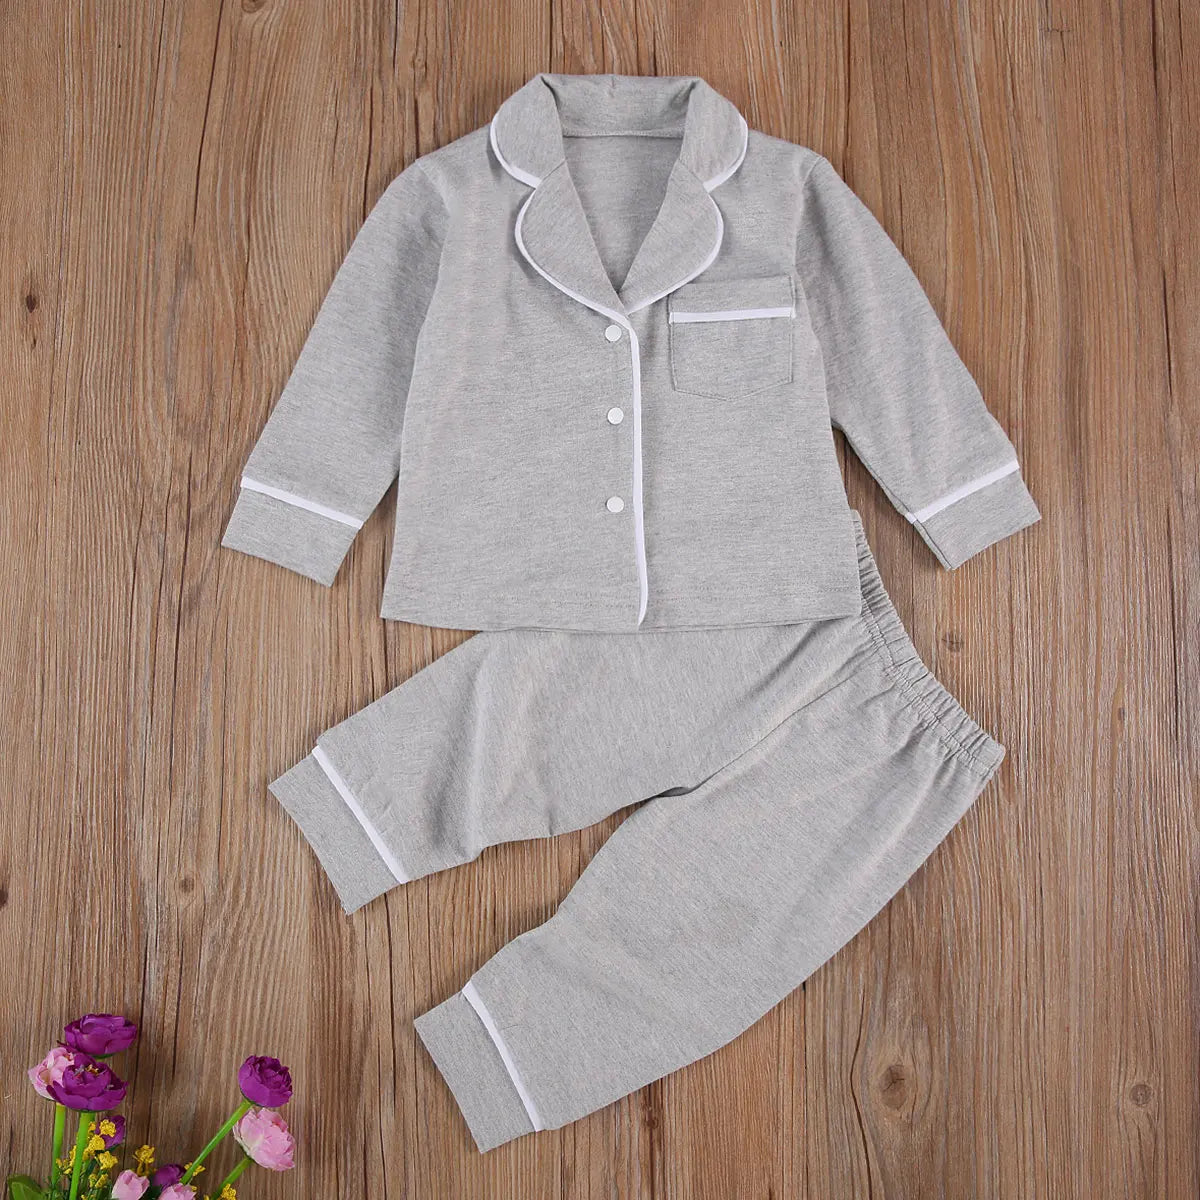 Infant Kids Baby Girls Boys 2Pcs 100% Cotton Pajama Sets Long Sleeve Jacket Shirt Pants Solid Sleepwear 6M-5Y